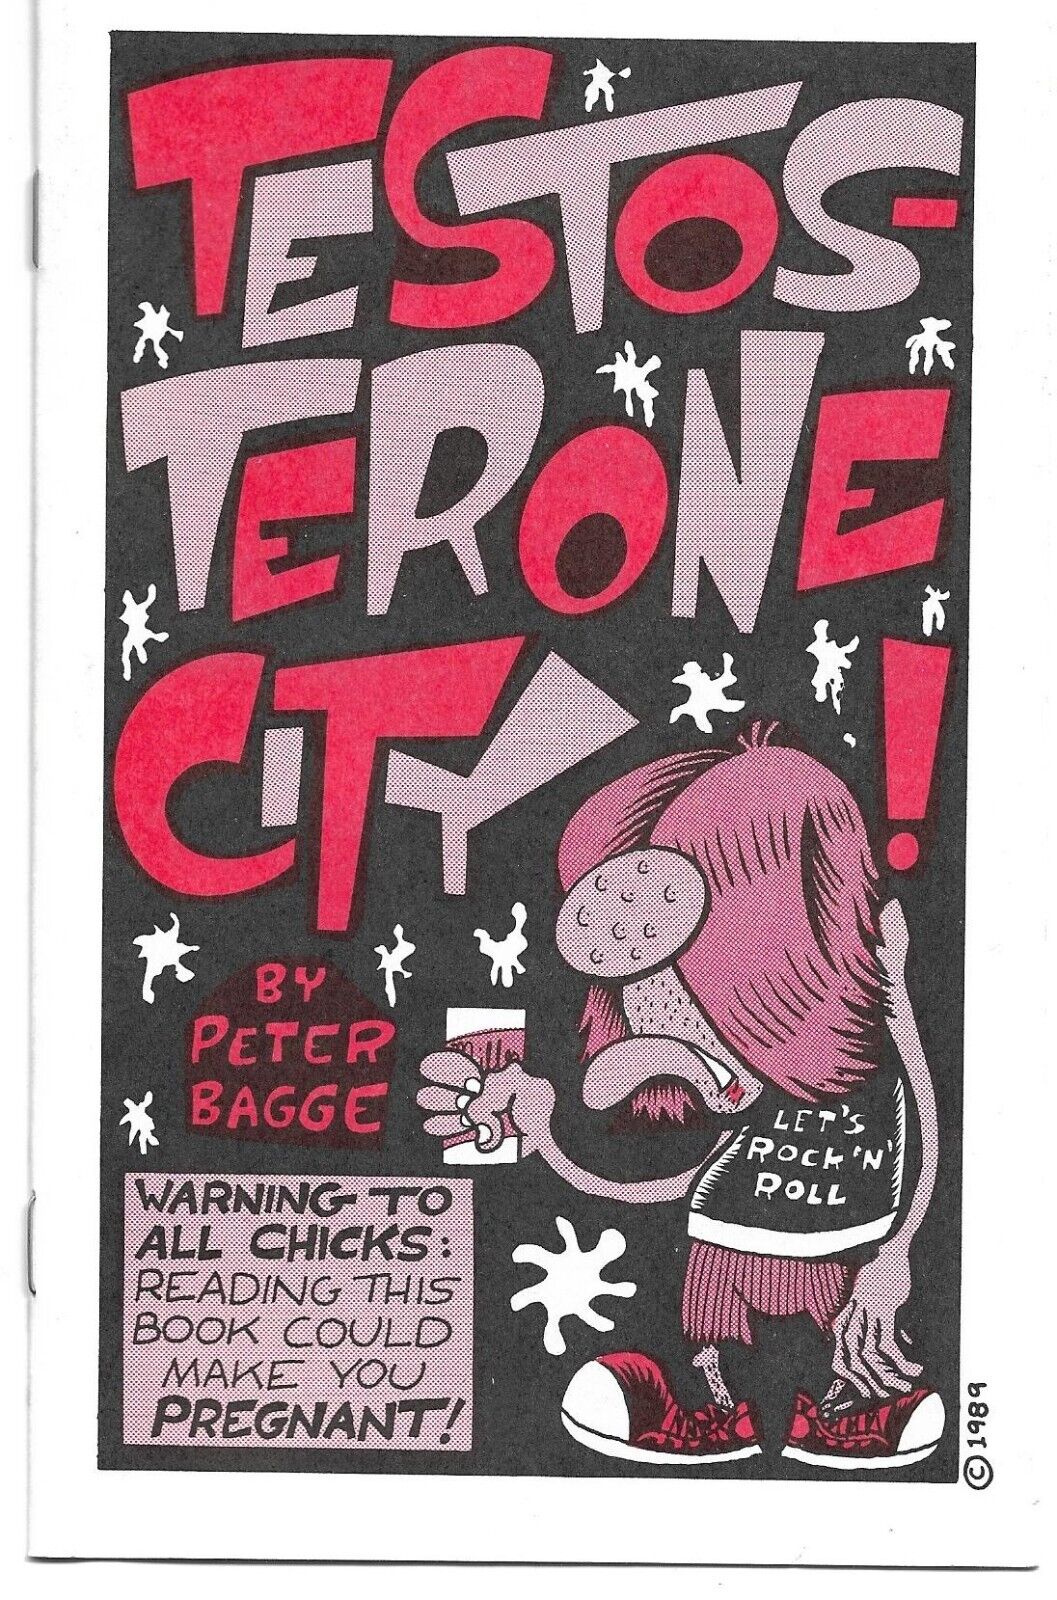 Testosterone City Comic (Peter Bagge/Hate/Neat Stuff/1994)